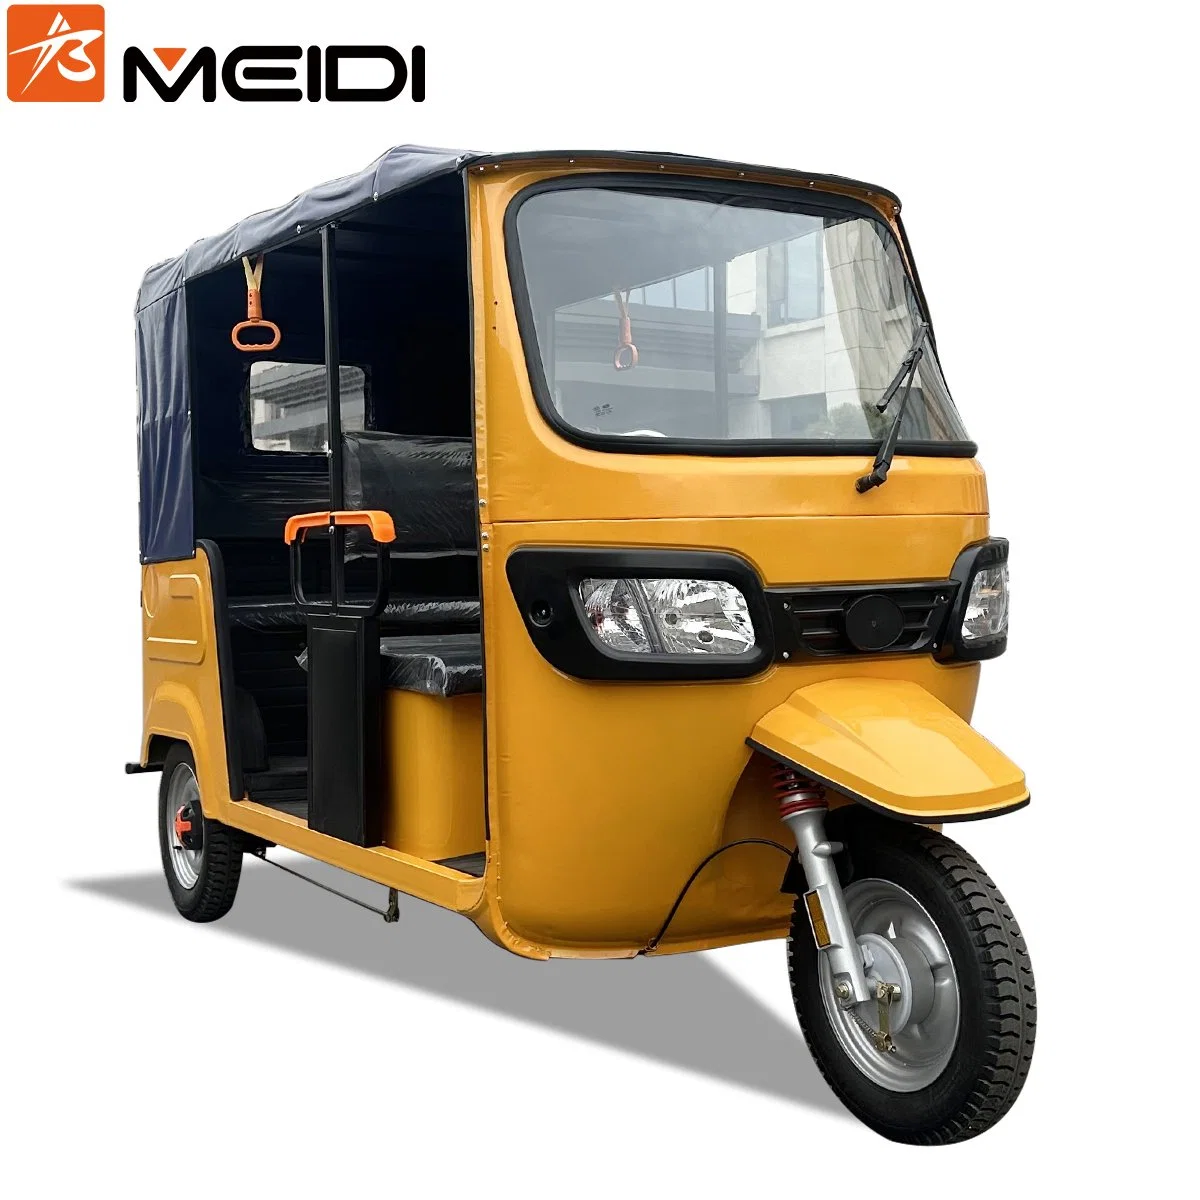 Meidi Xuzhou Factory New Design Battery Powered Tricycle Passenger Electric Rickshaw